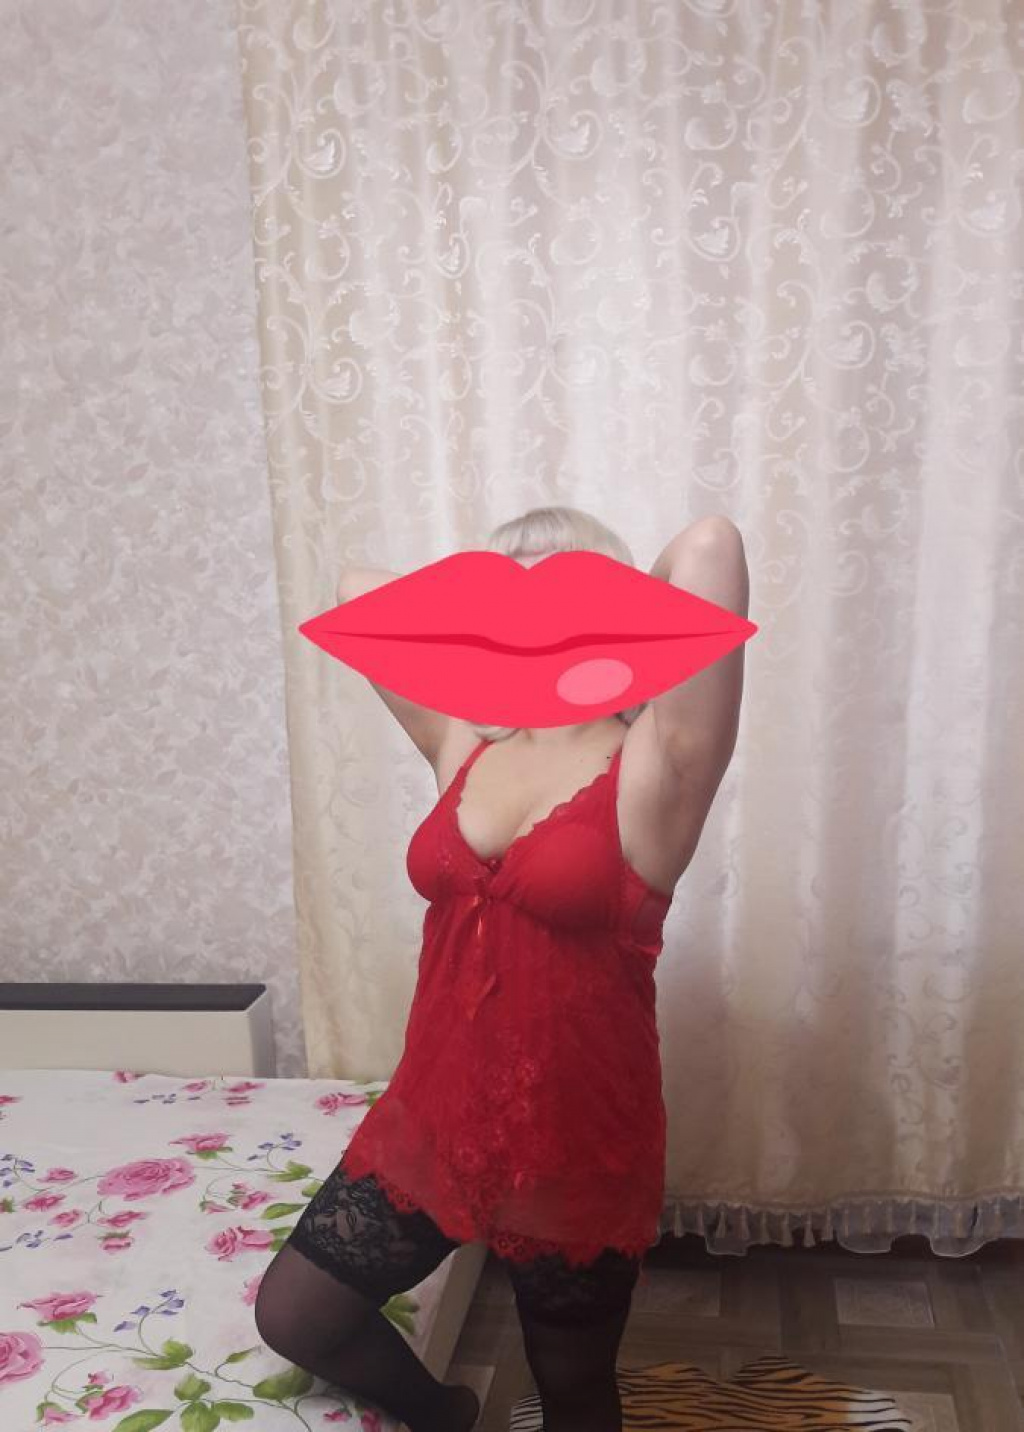 Лесби: Проститутка-индивидуалка в Воронеже